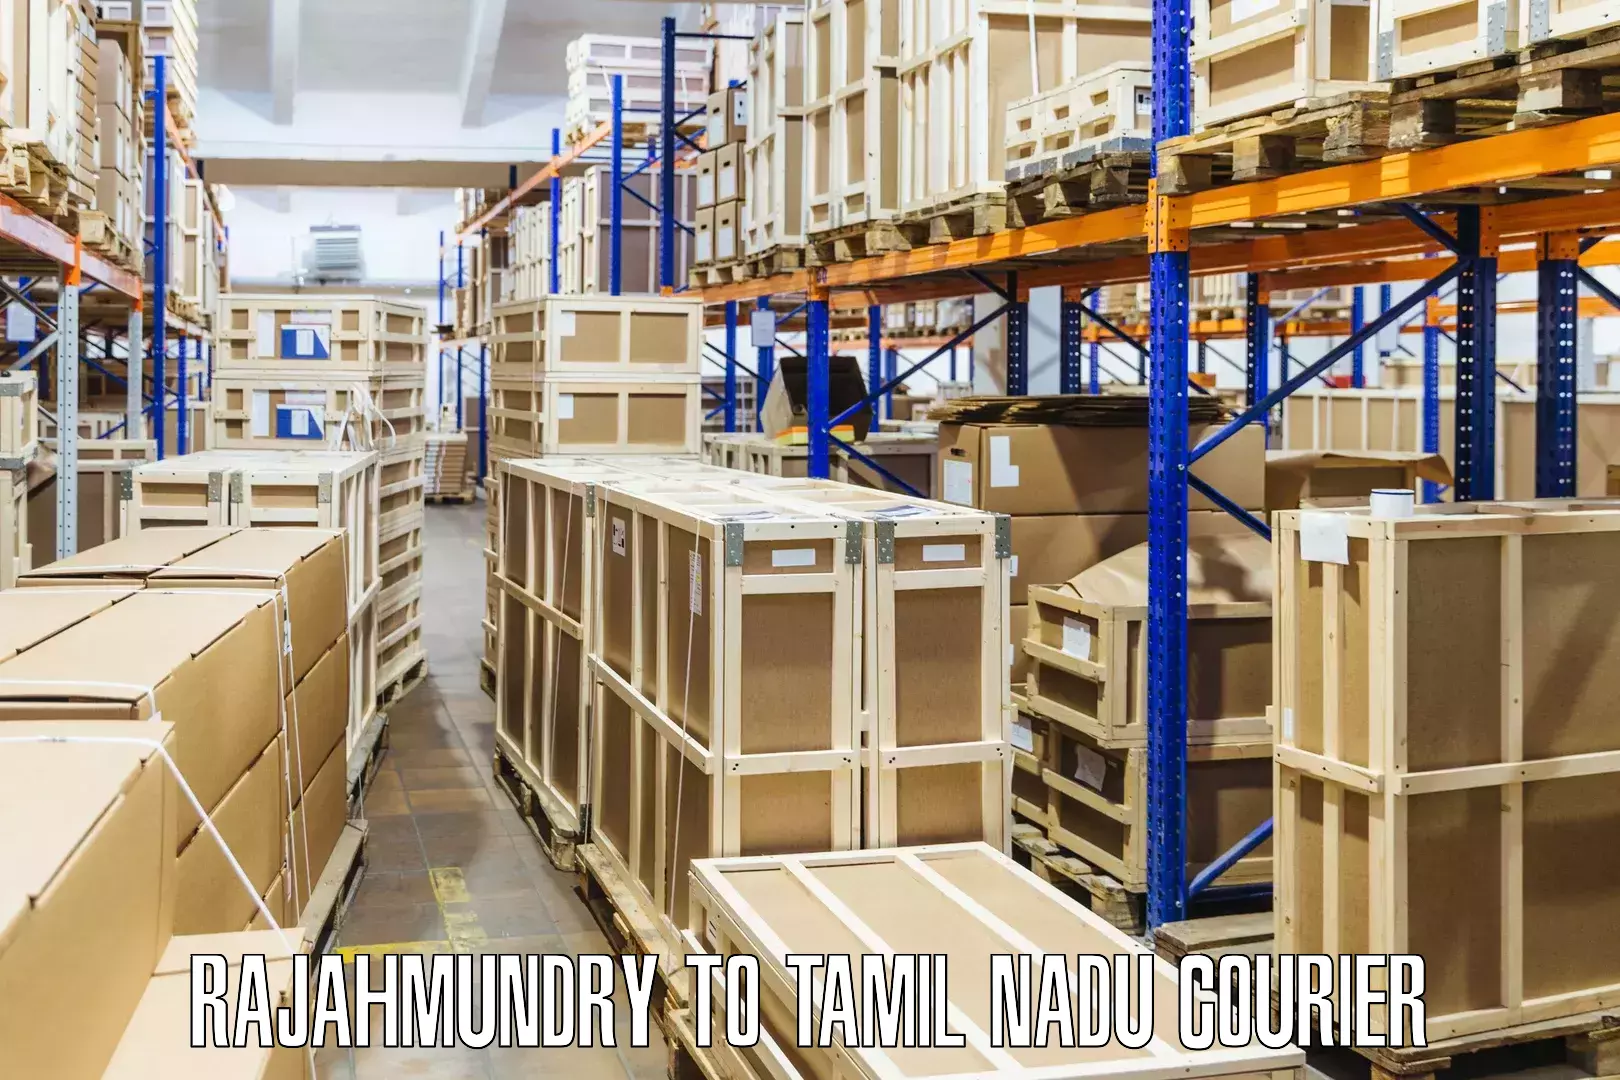 User-friendly delivery service Rajahmundry to Thiruporur